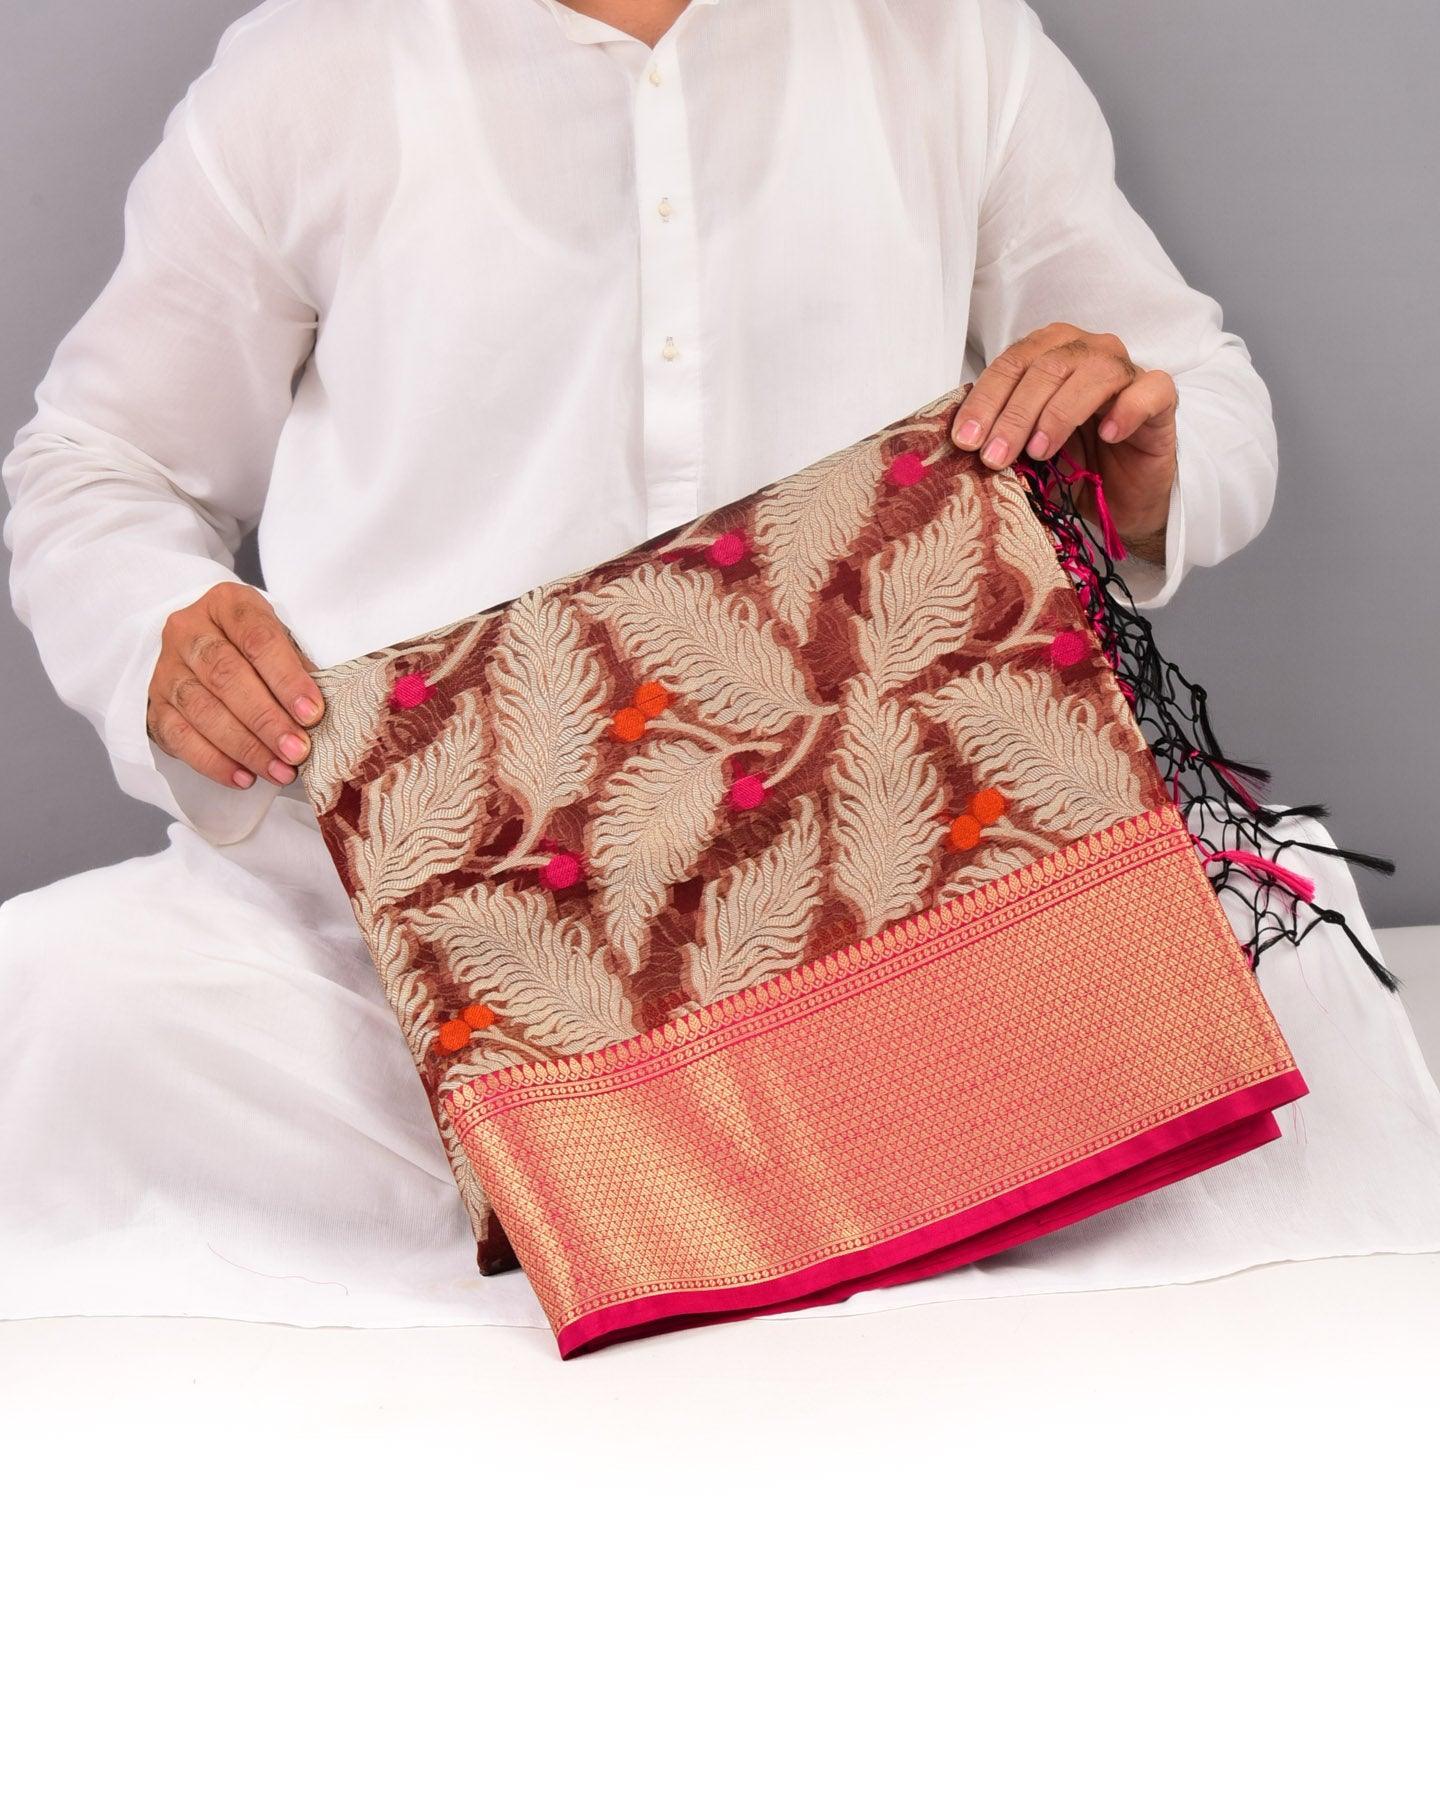 Maroon Banarasi Feather Cutwork Brocade Woven Art Cotton Silk Saree - By HolyWeaves, Benares